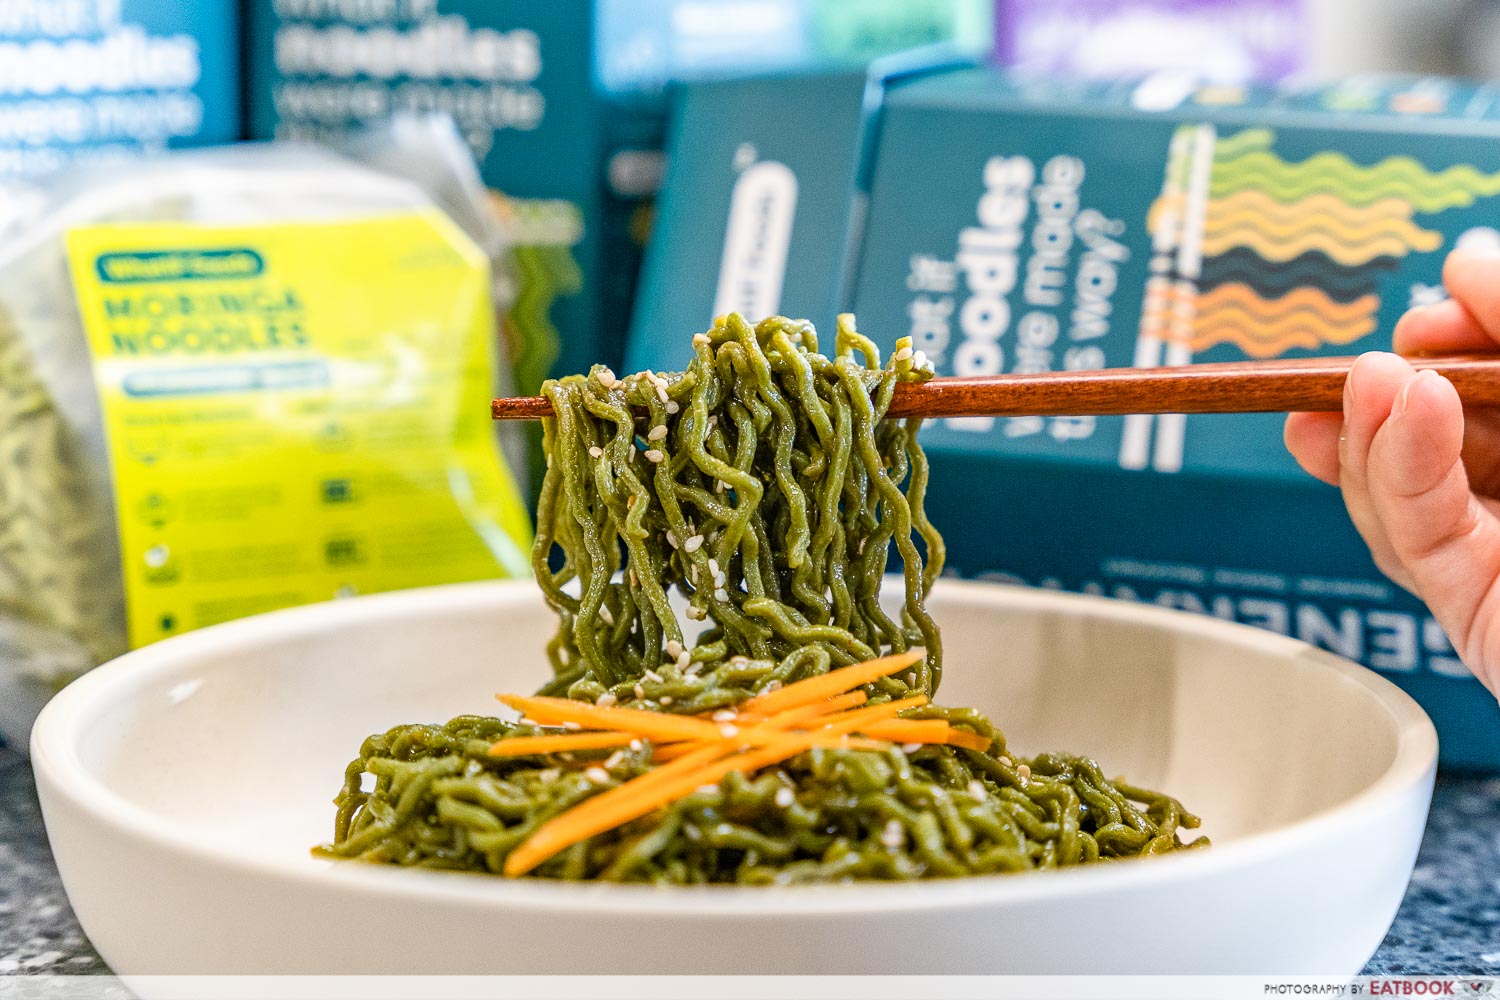 whatif foods - moringa noodles interaction